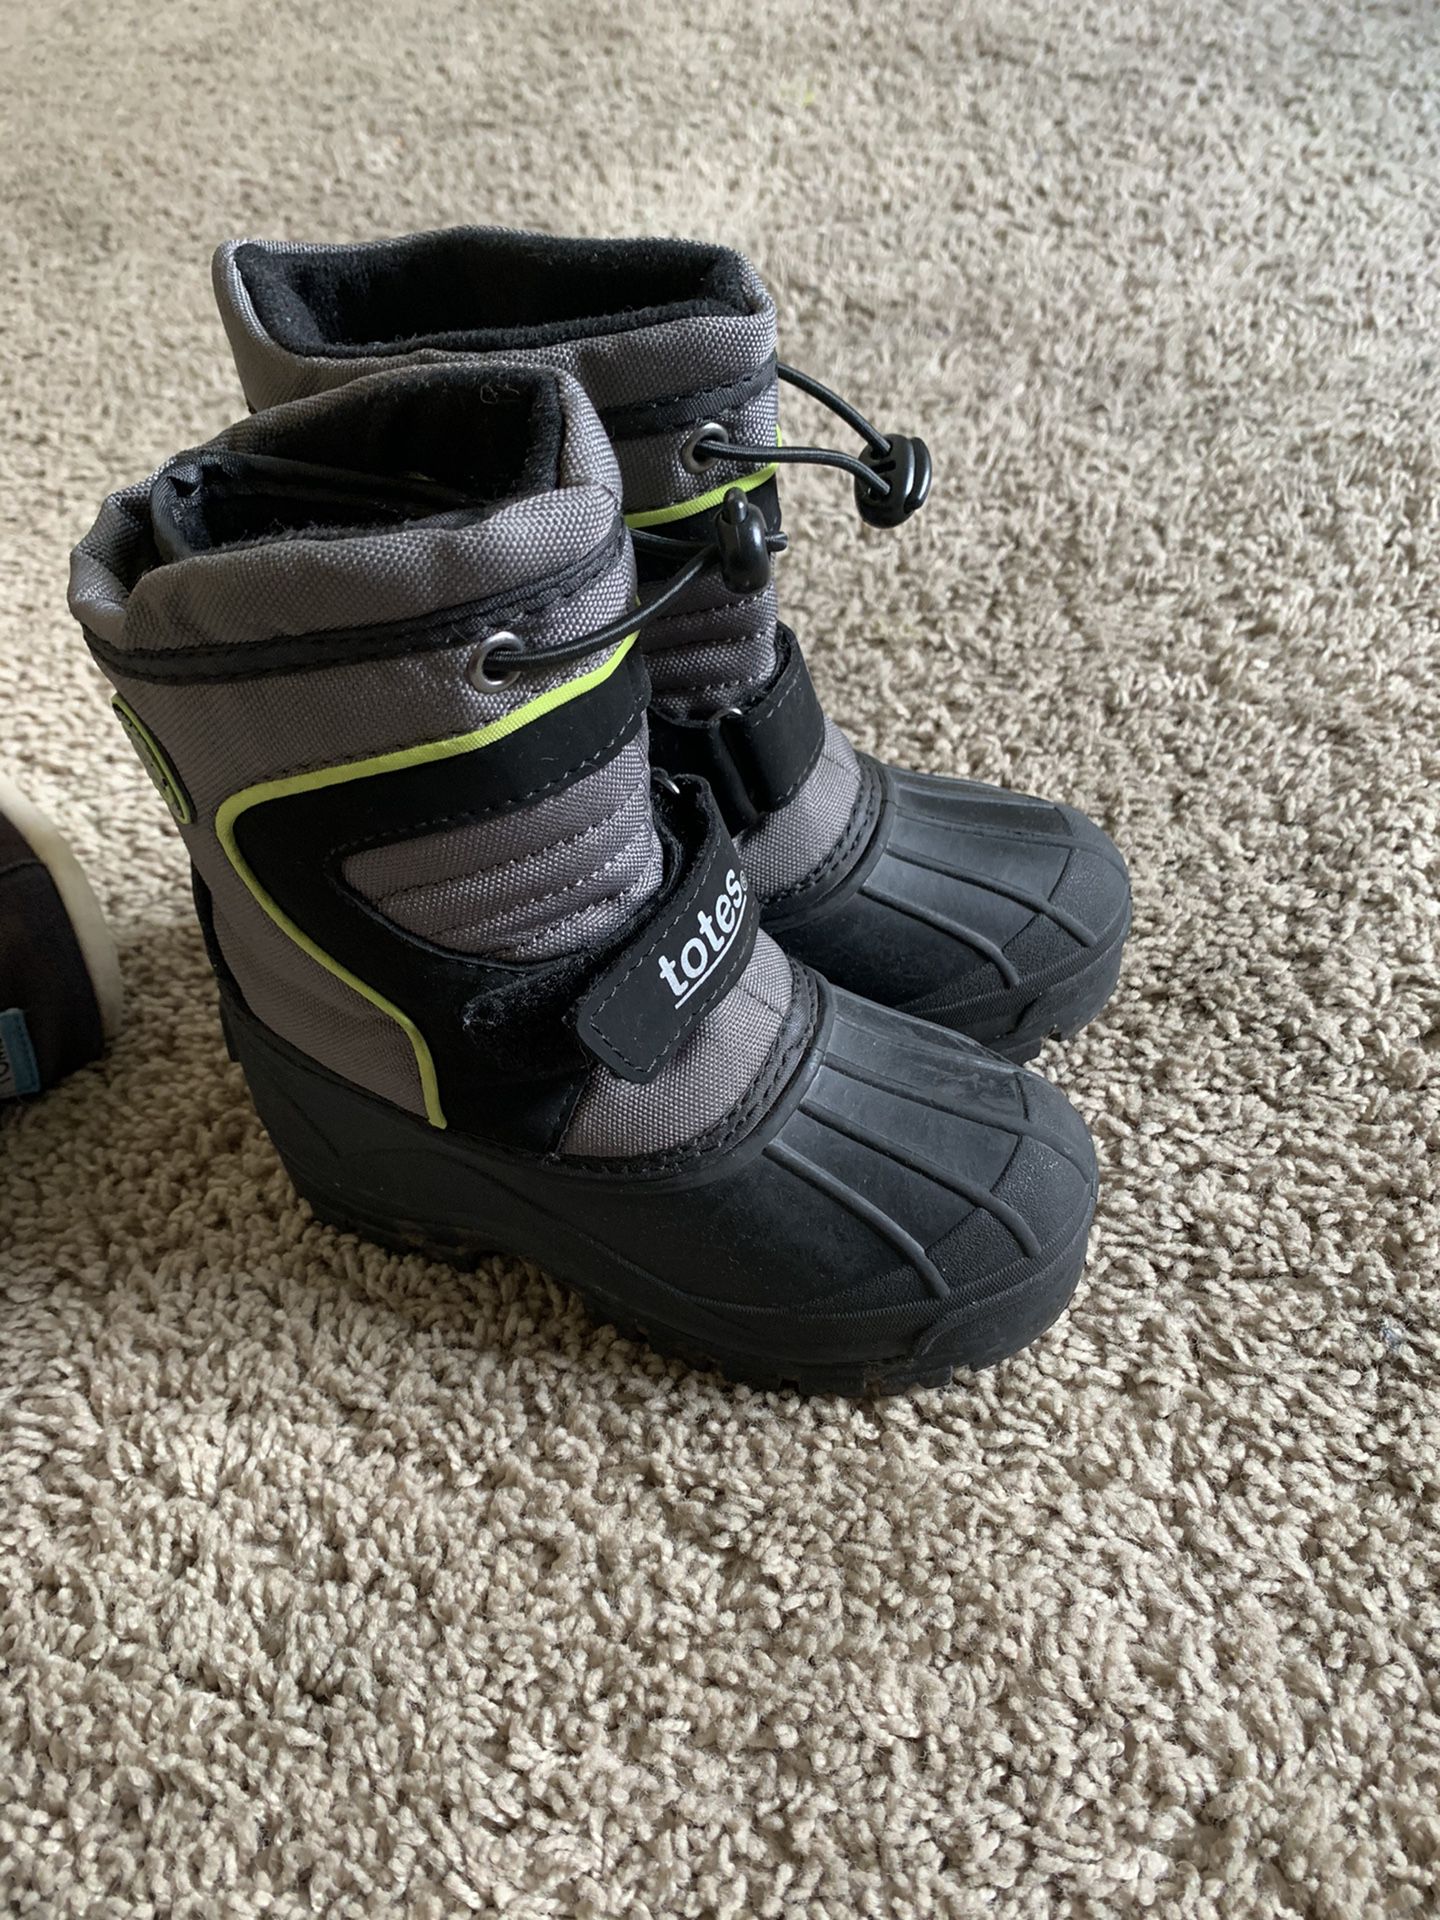 Kids snow boots size 10